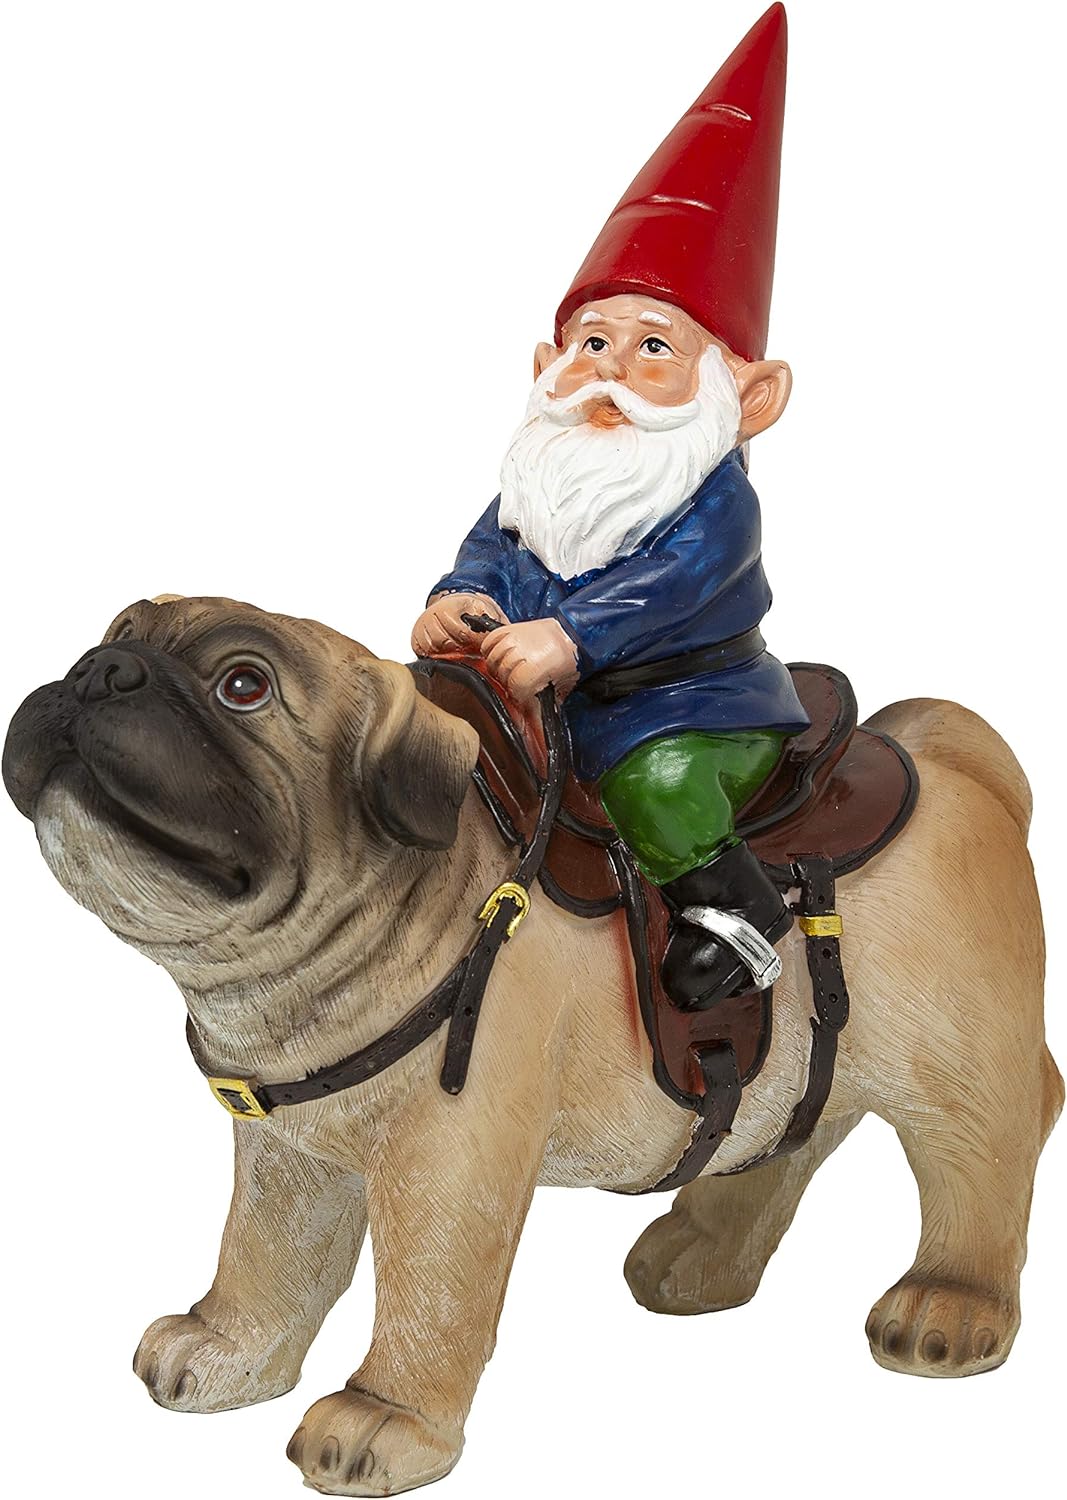 Gnome Riding a Pug Sculpture for Patio